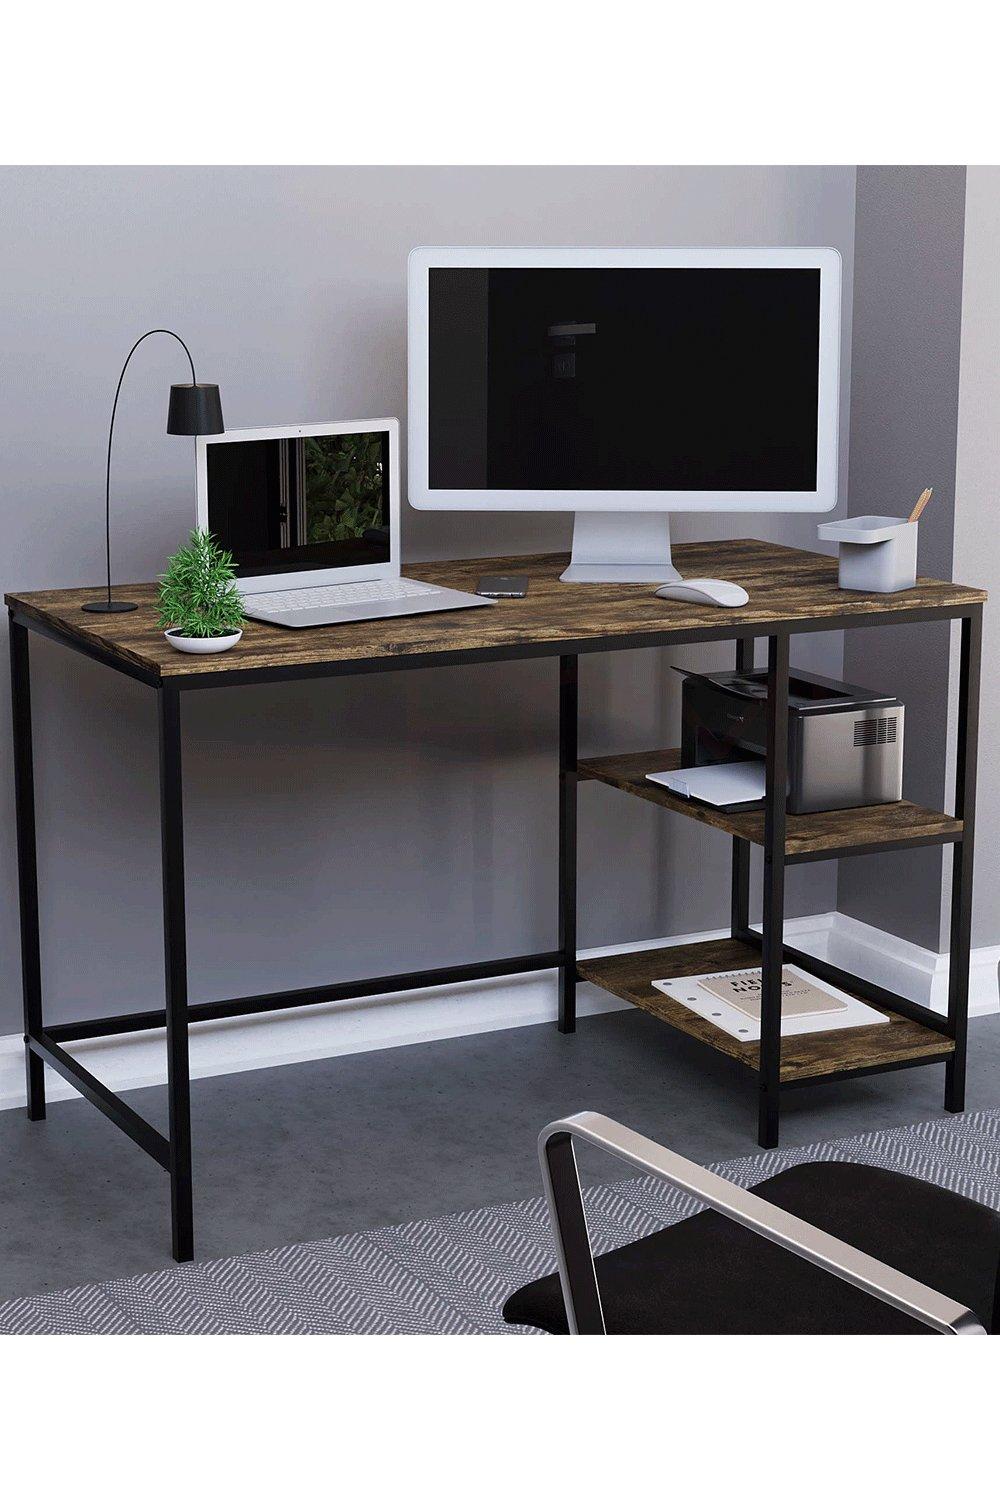 Vida Designs Brooklyn Office Desk with 2 Shelves Home Office Workstation Storage